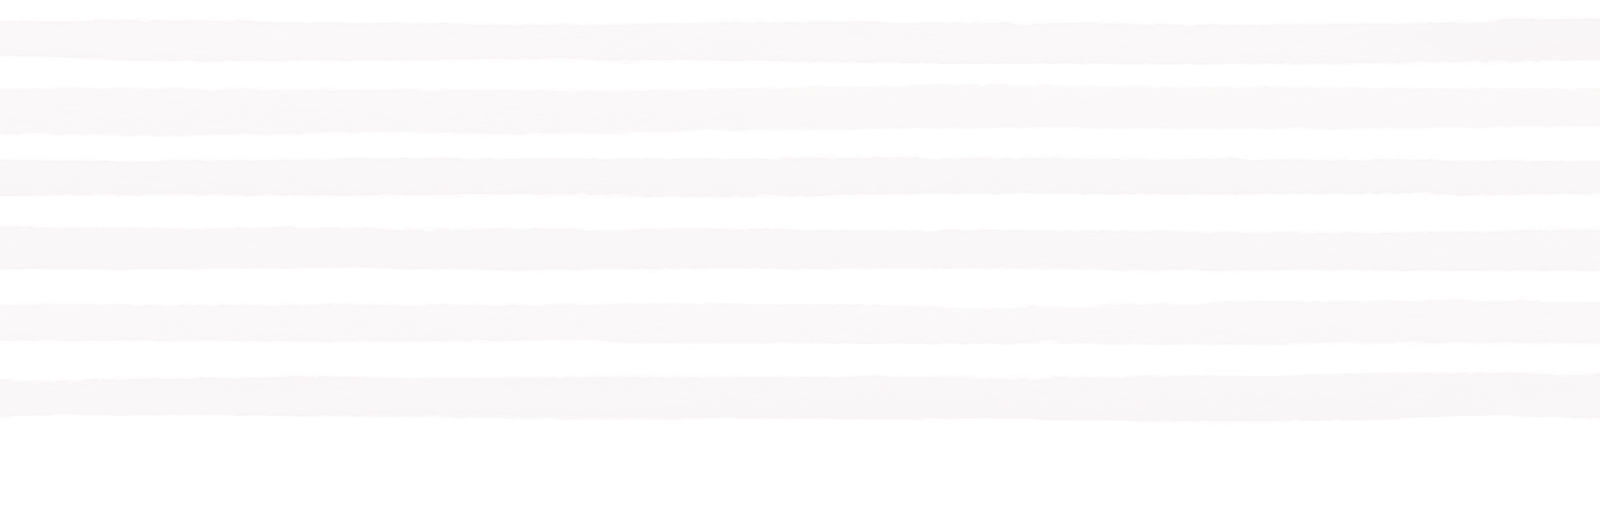 Watercolor Stripes - Horizontal (for web)